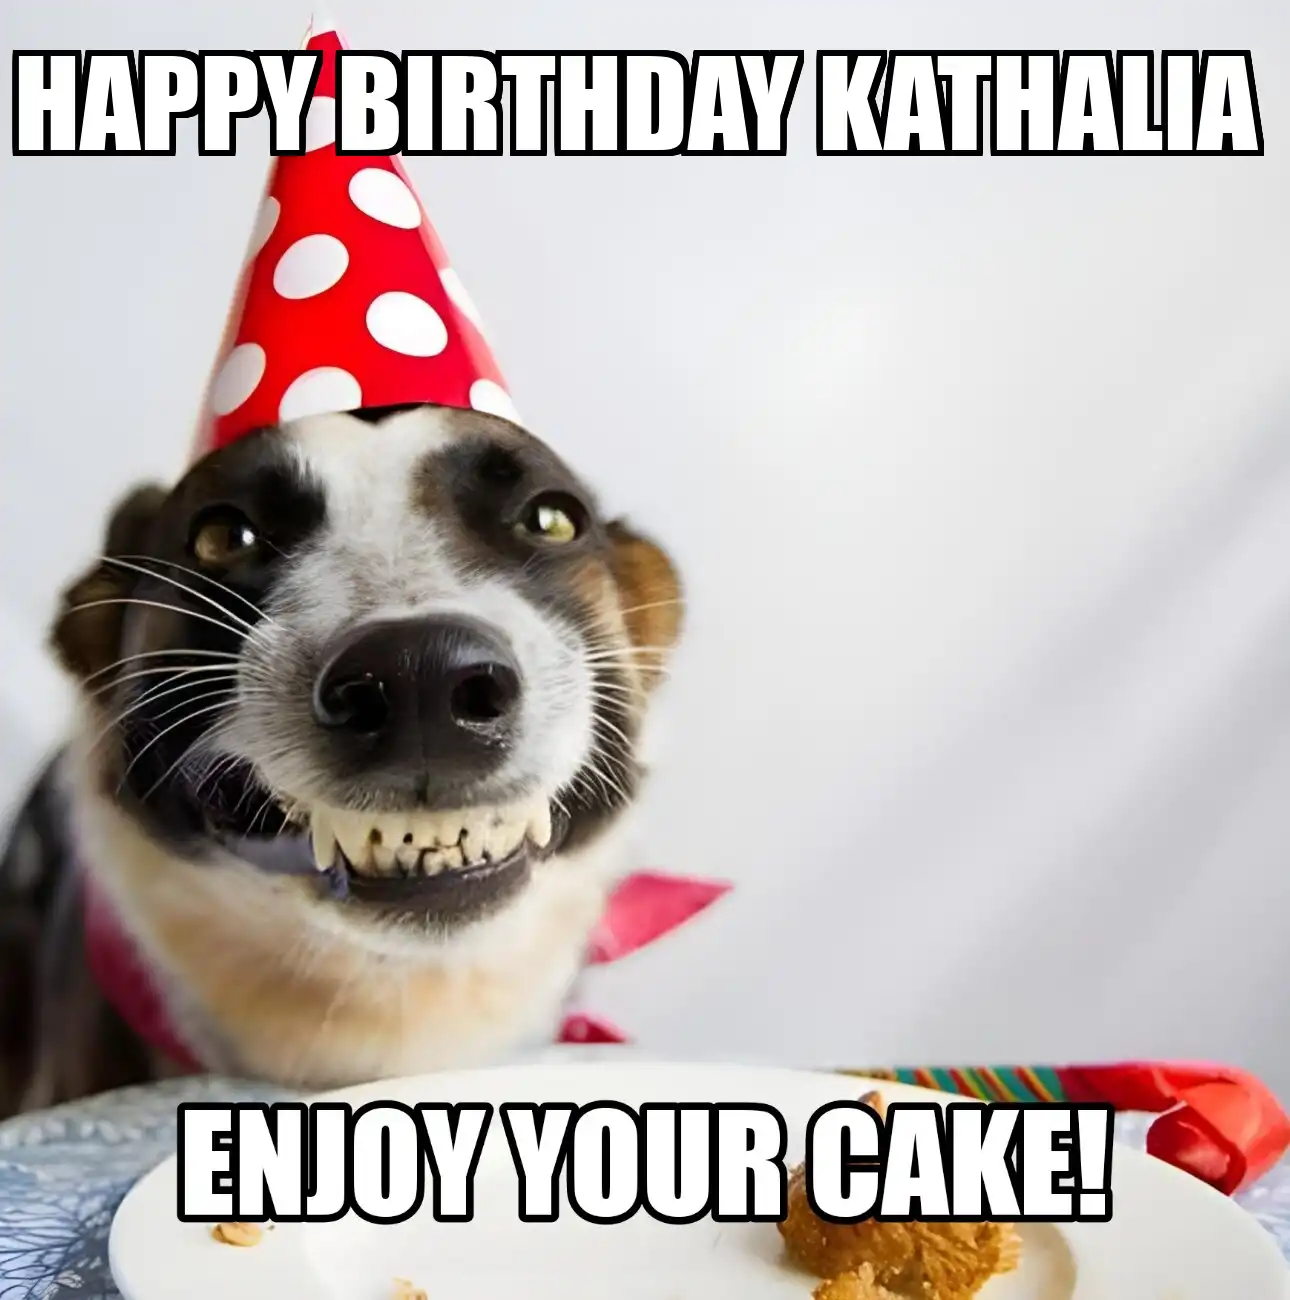 Happy Birthday Kathalia Enjoy Your Cake Dog Meme